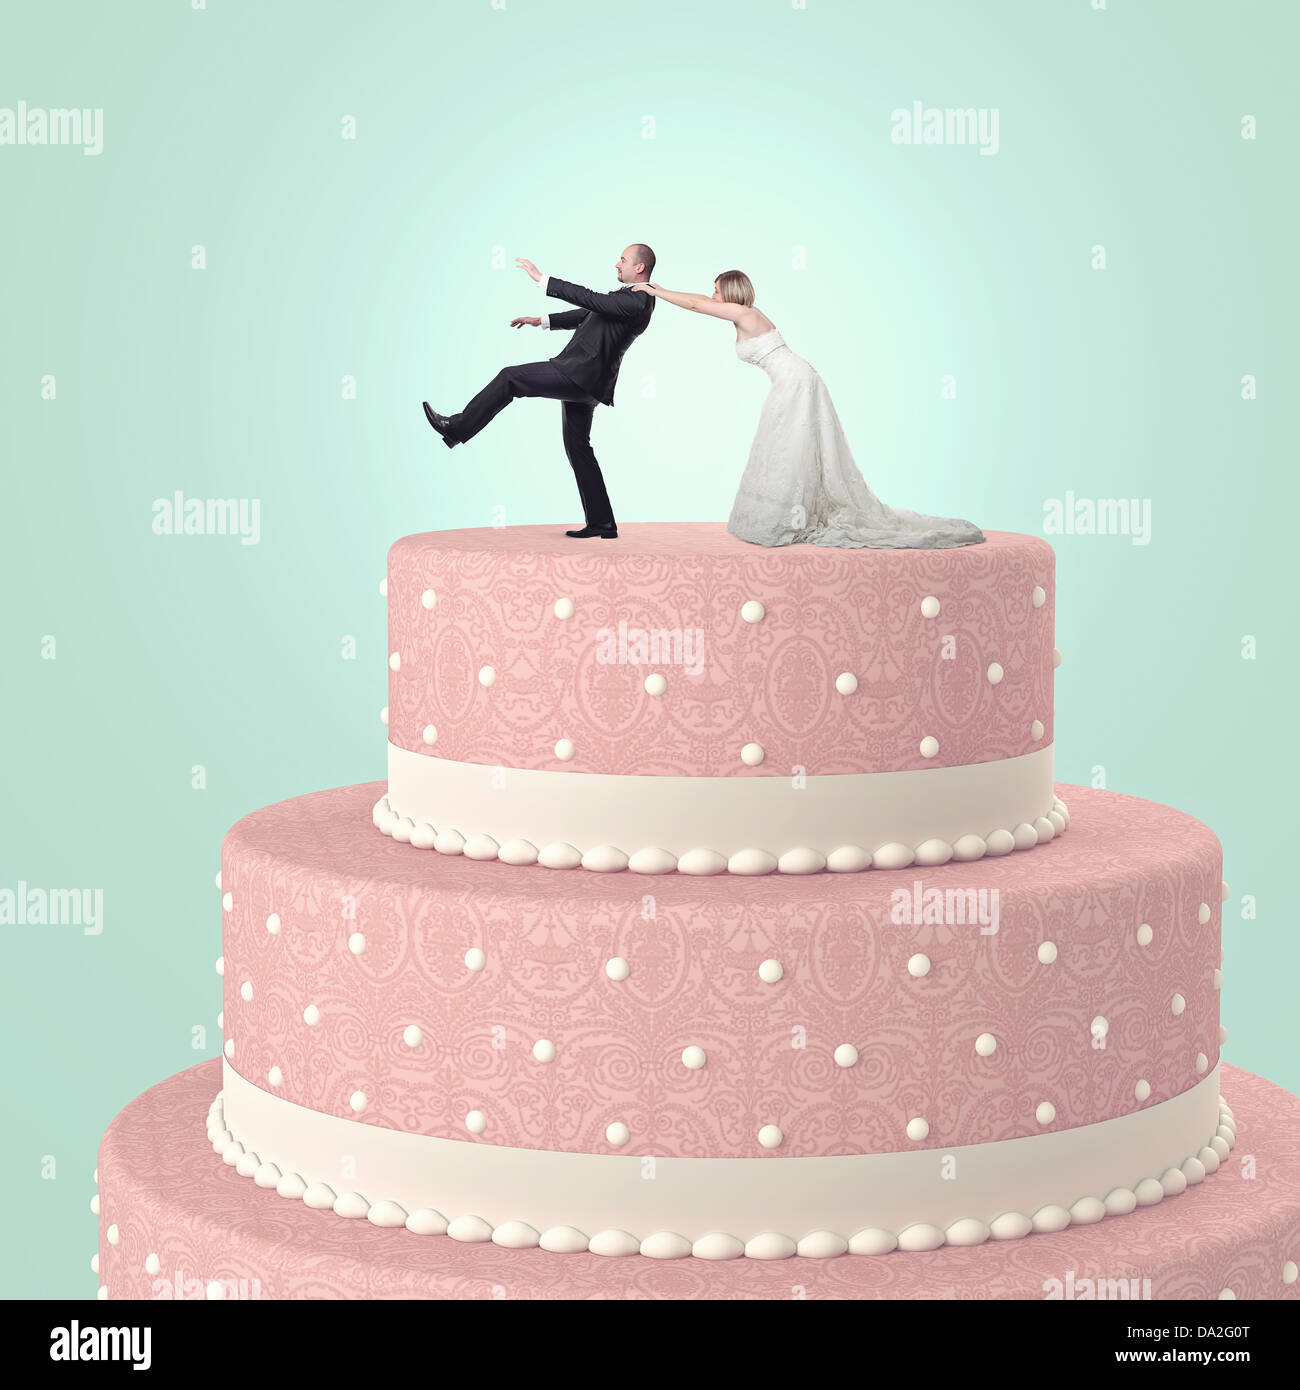 funny wedding cake with goom and bride Stock Photo - Alamy